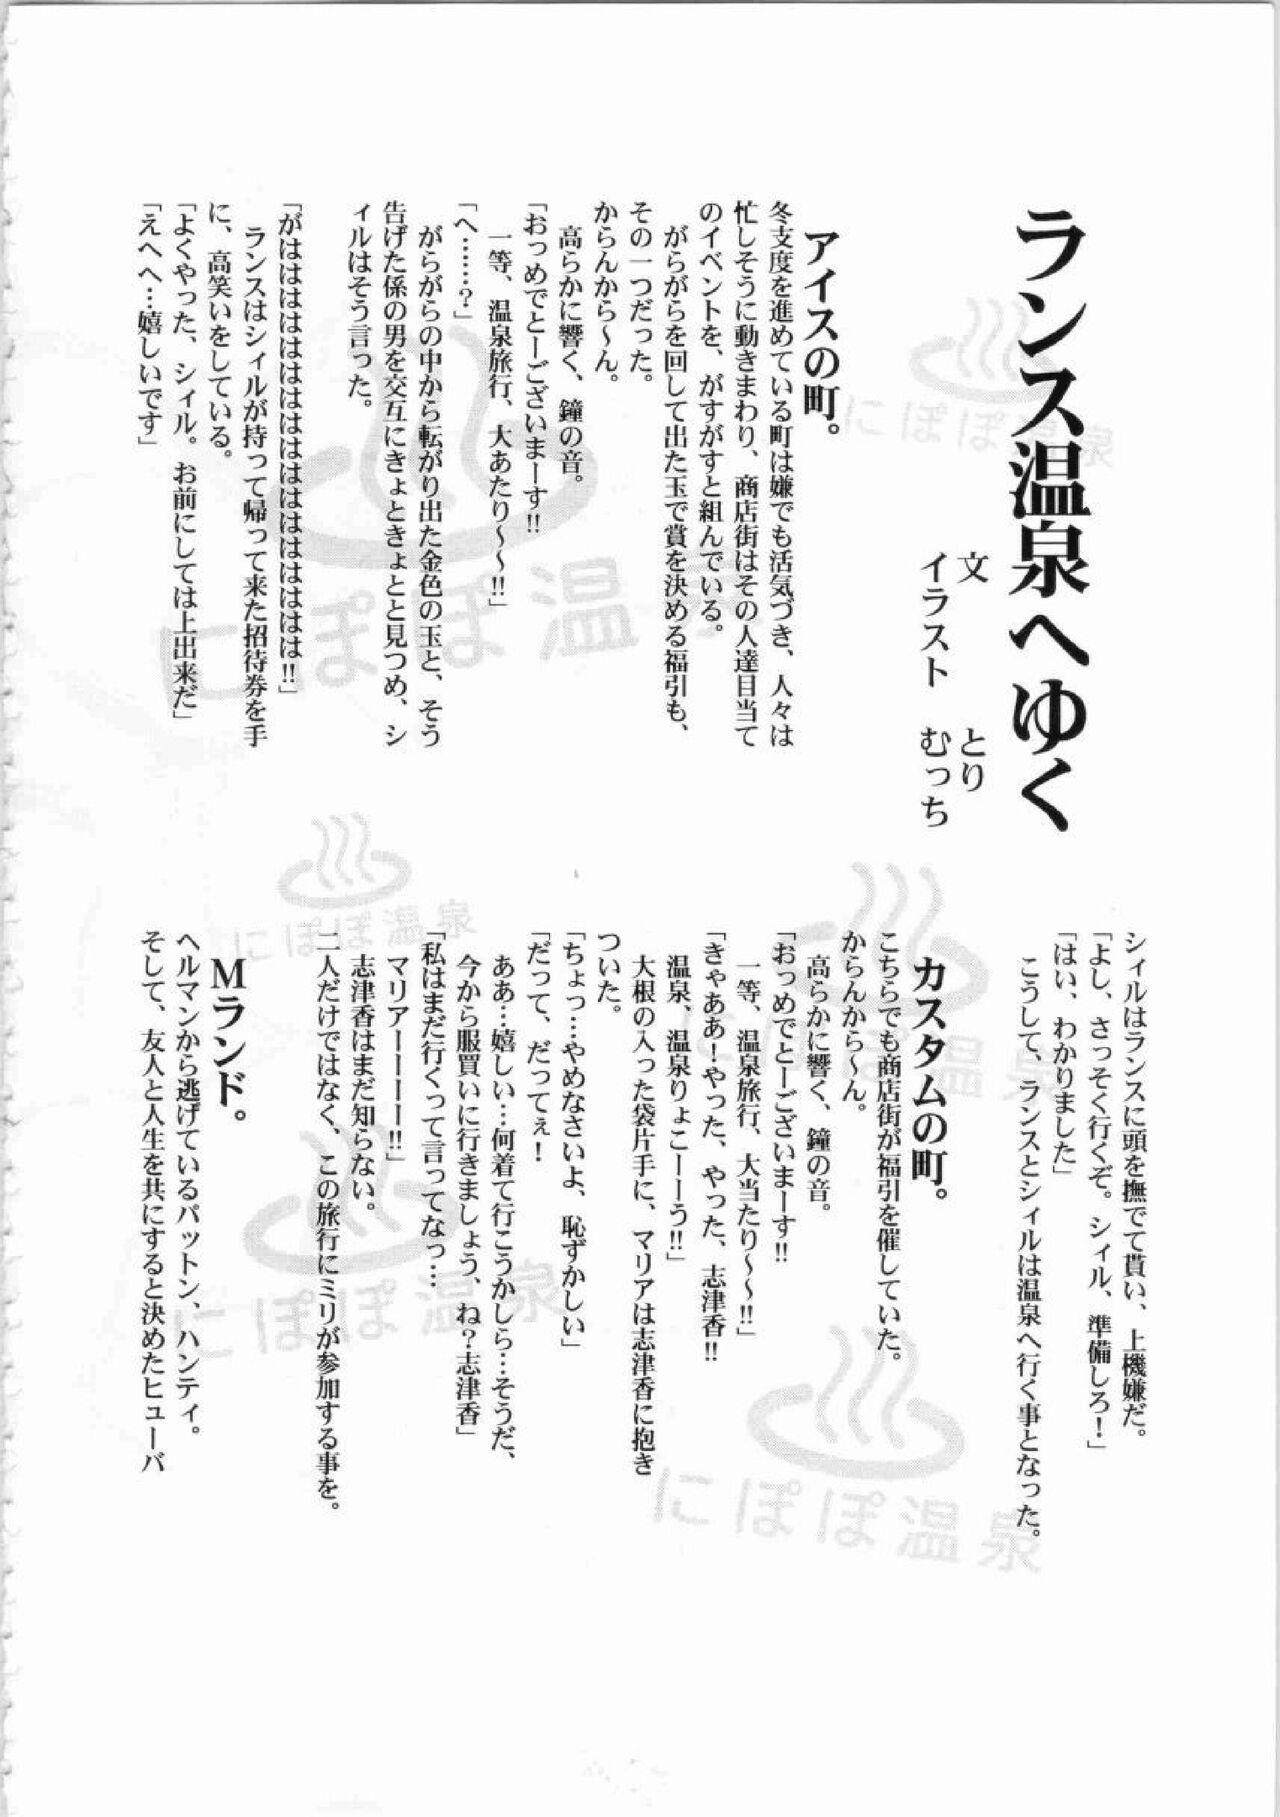 Kichikuou Rance First Press Release Book 250